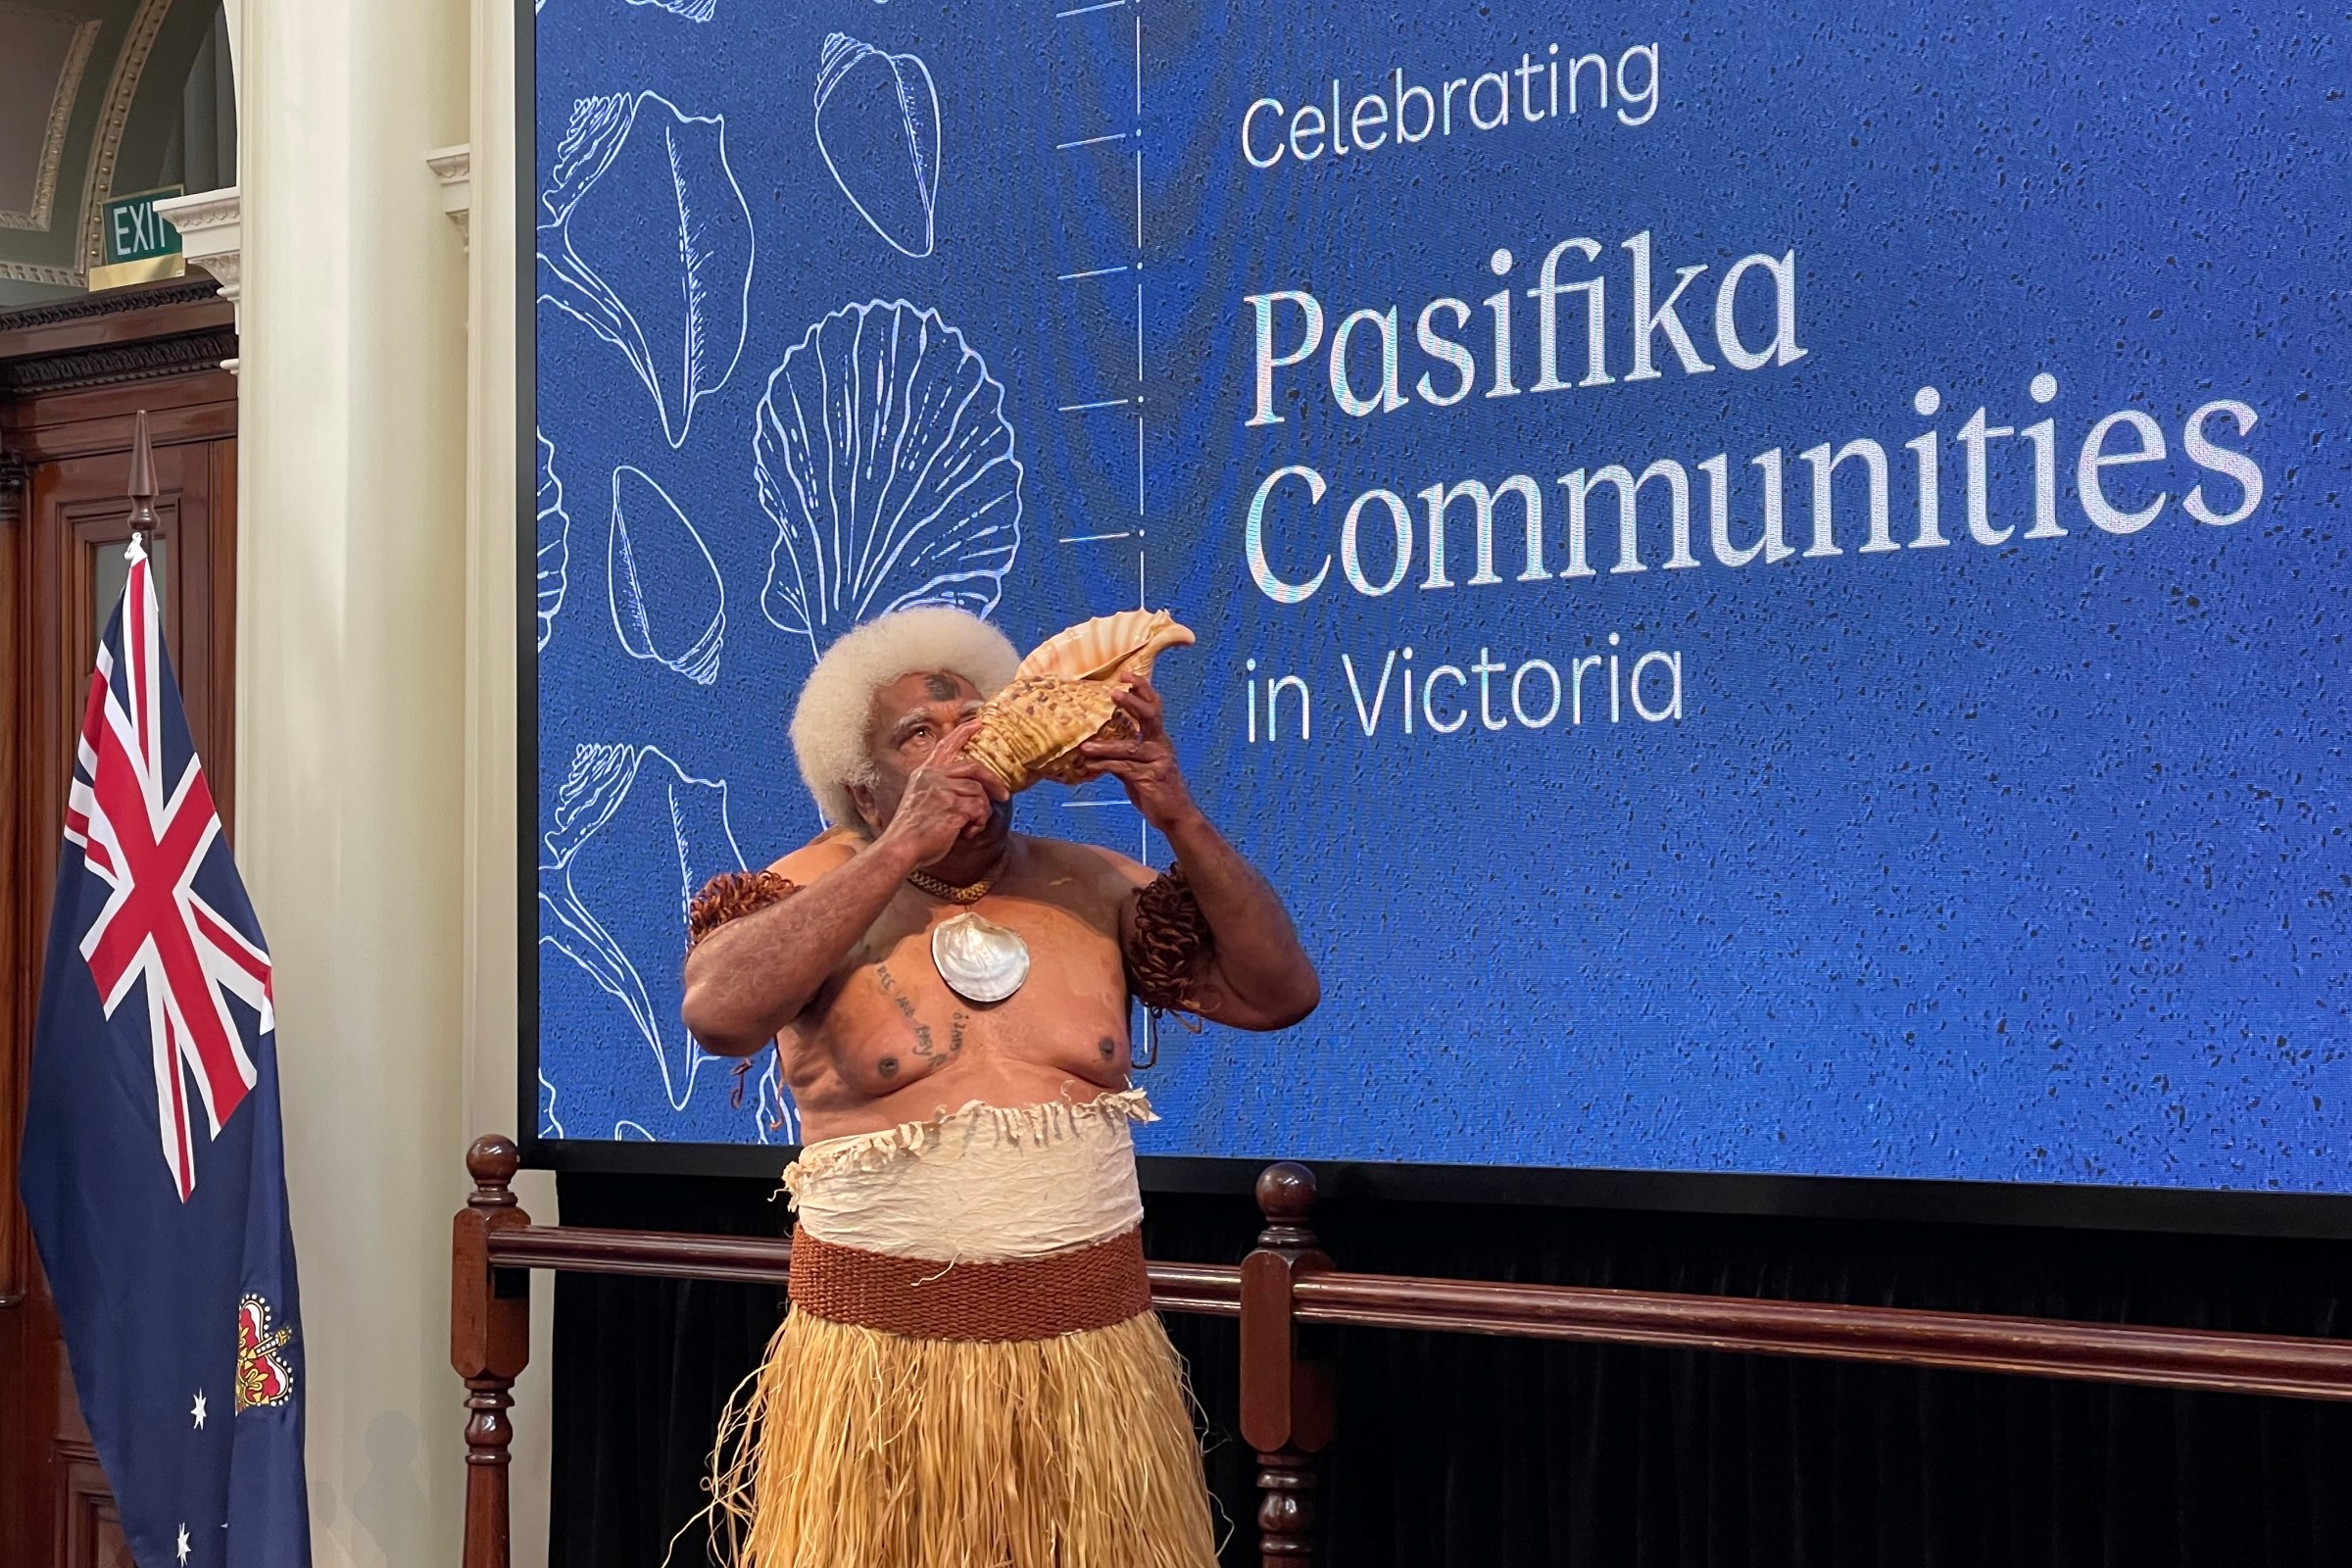 Pasifika communities celebrated at parliament